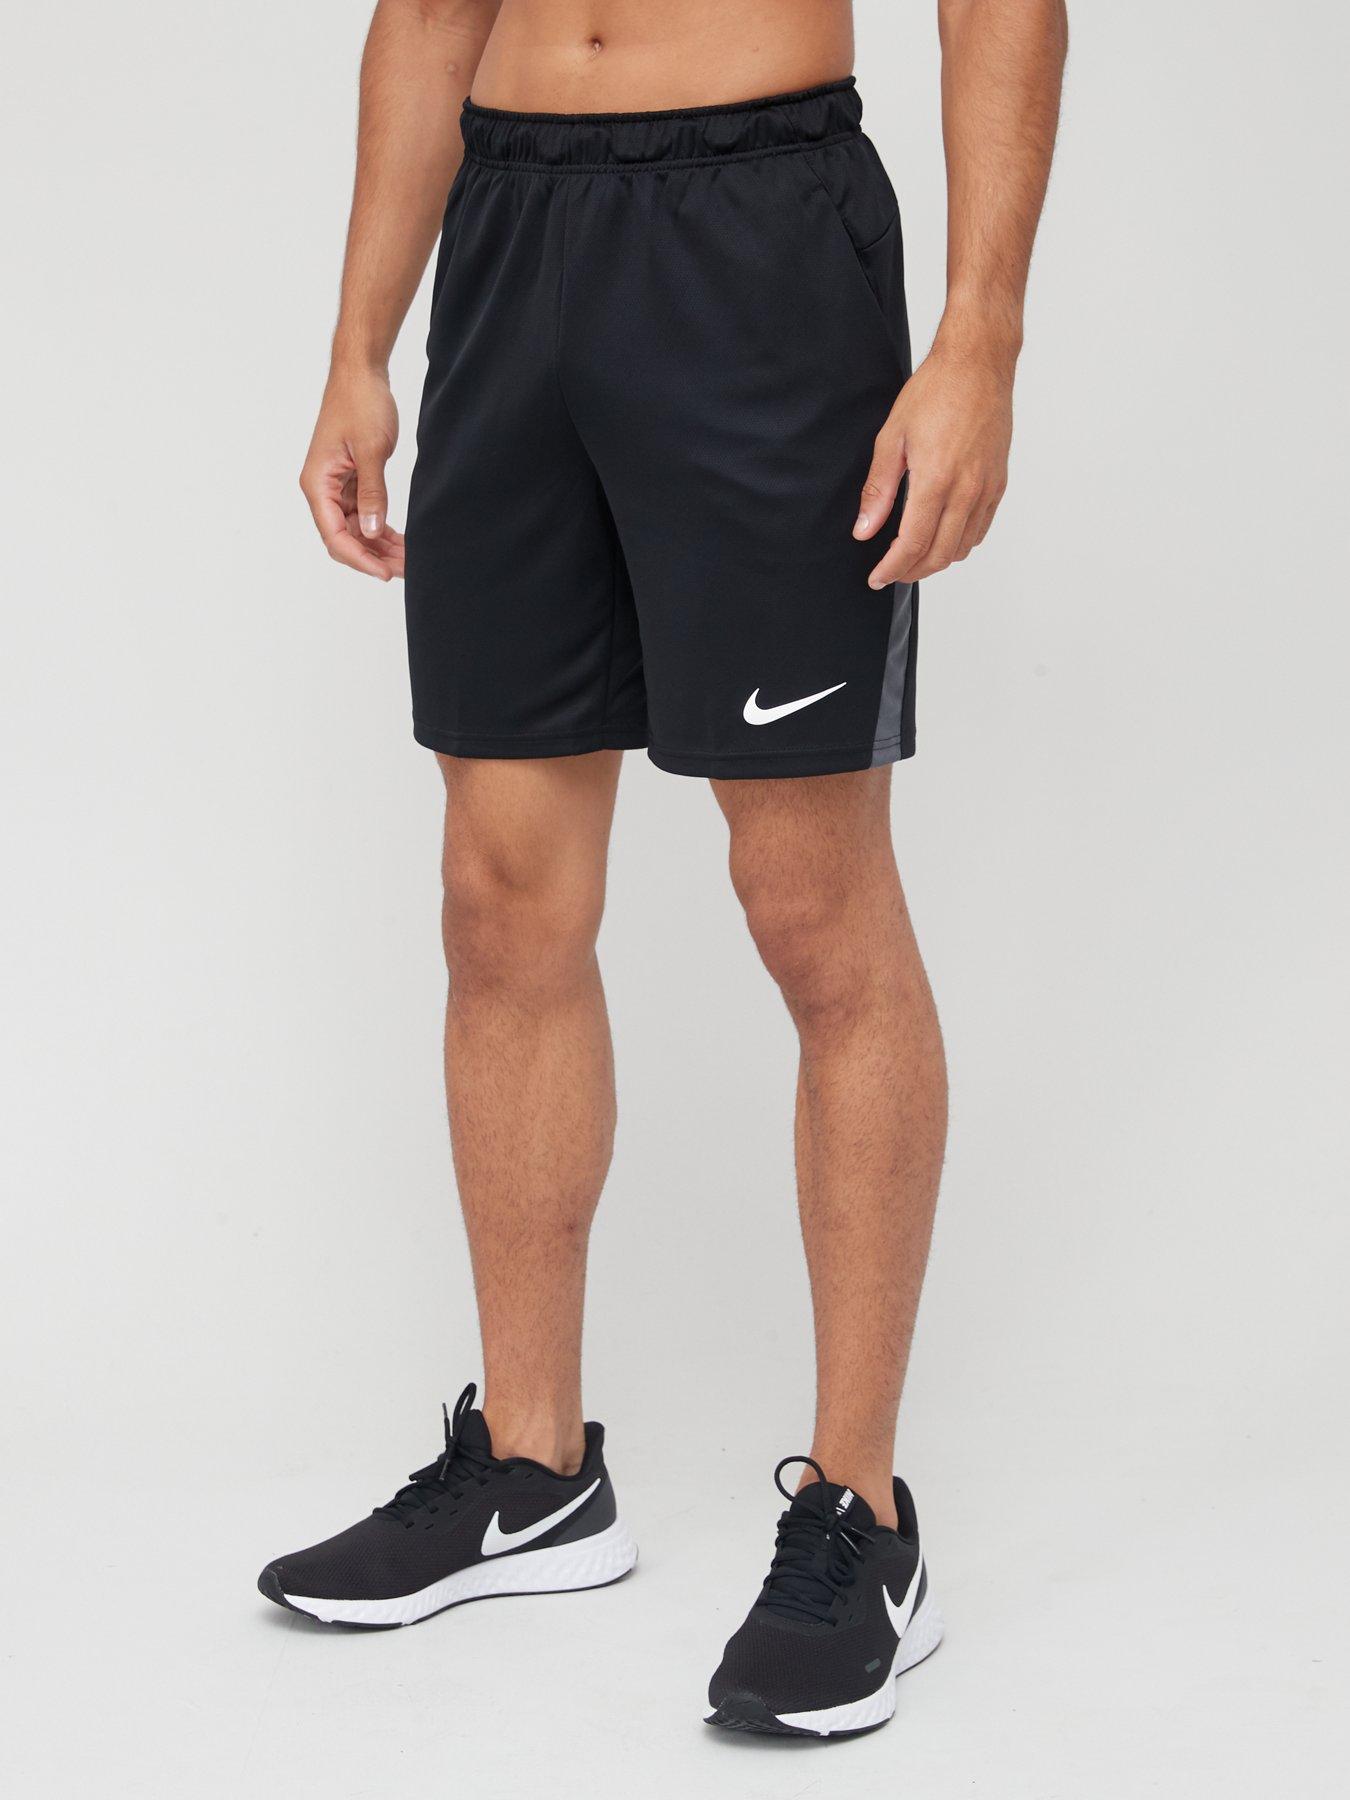 Shorts Dry Shorts 5.0 - Black/Grey